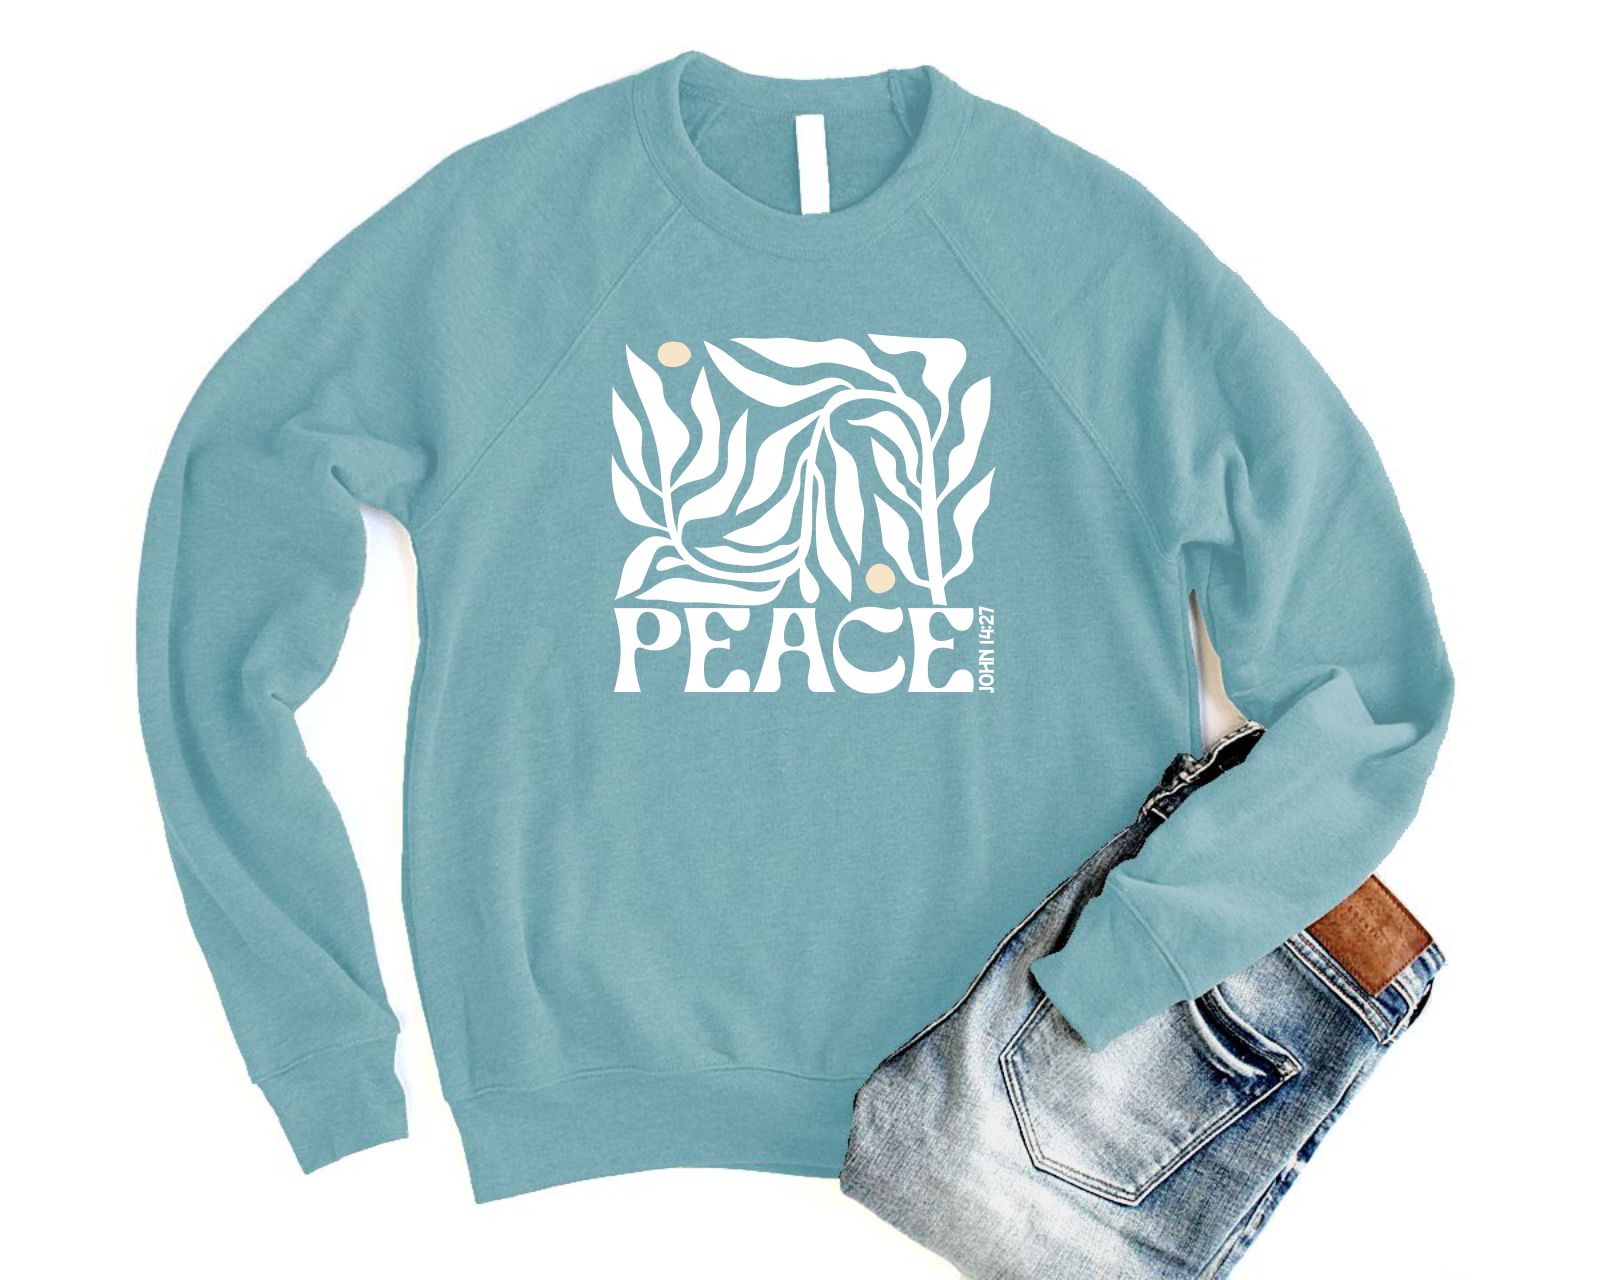 Peace John 14:27 Botanical Christian Sweatshirt for Women in unisex raglan  style with blue floral theme